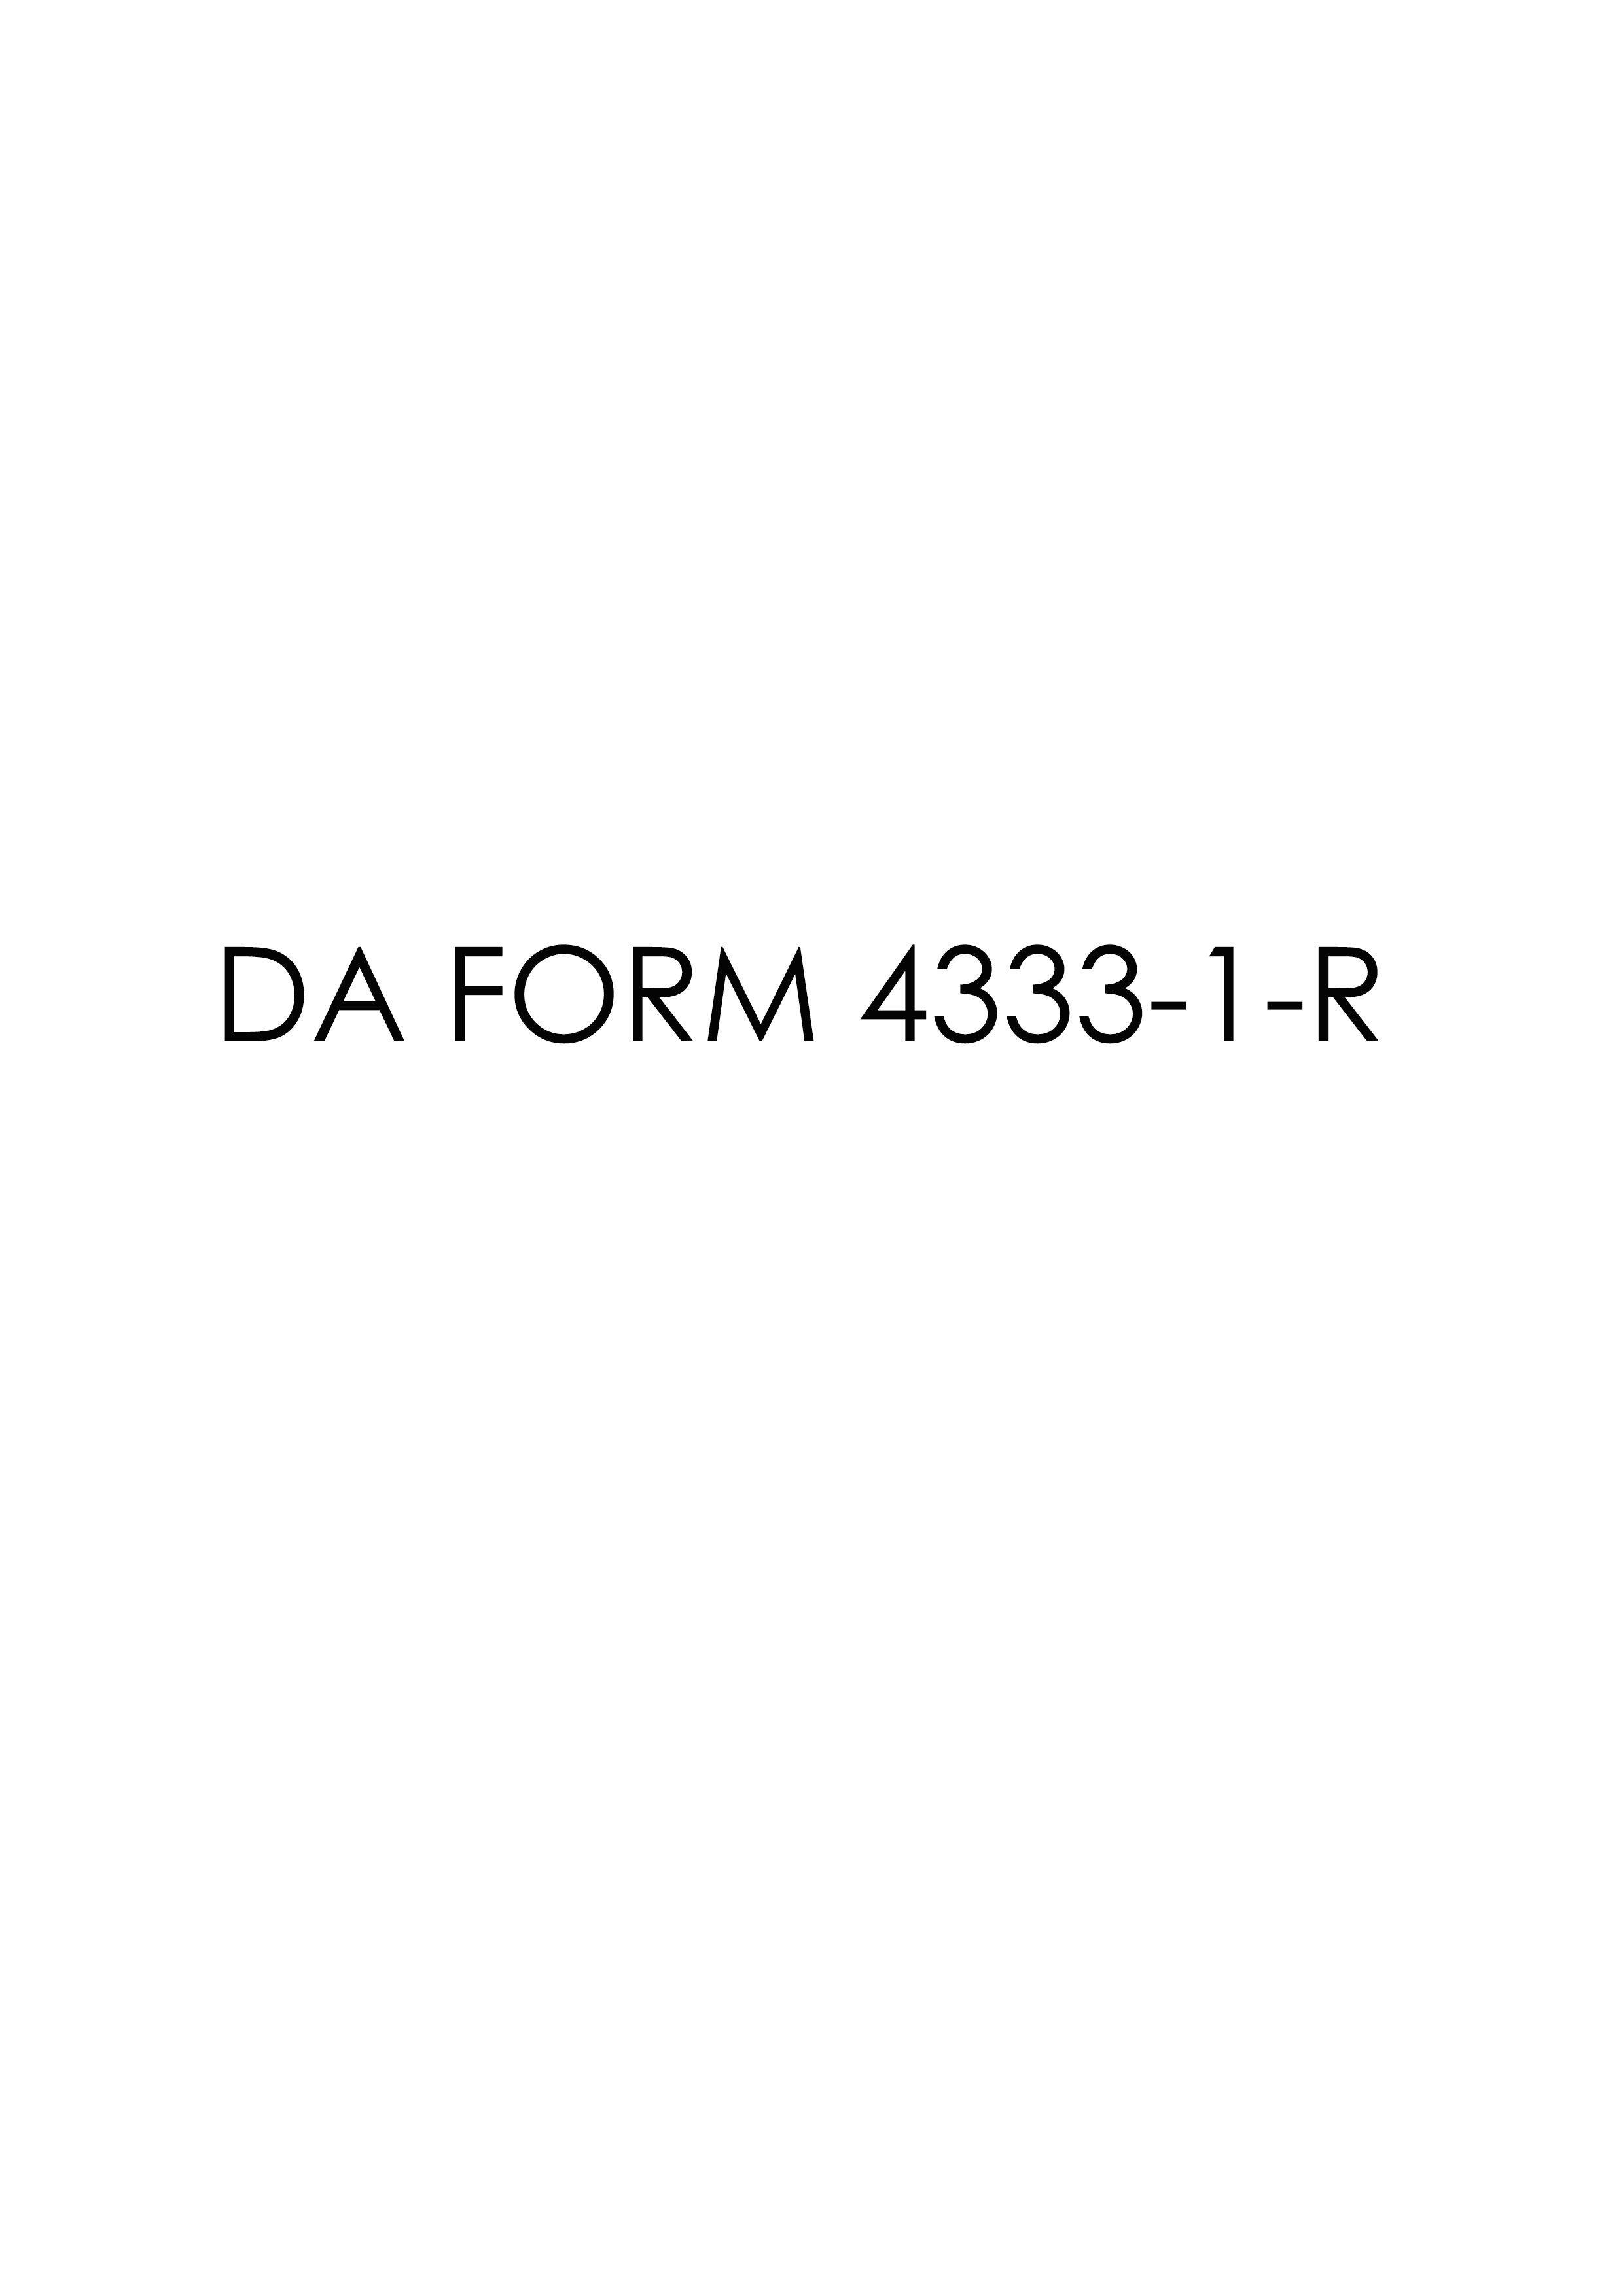 da Form 4333-1-R fillable